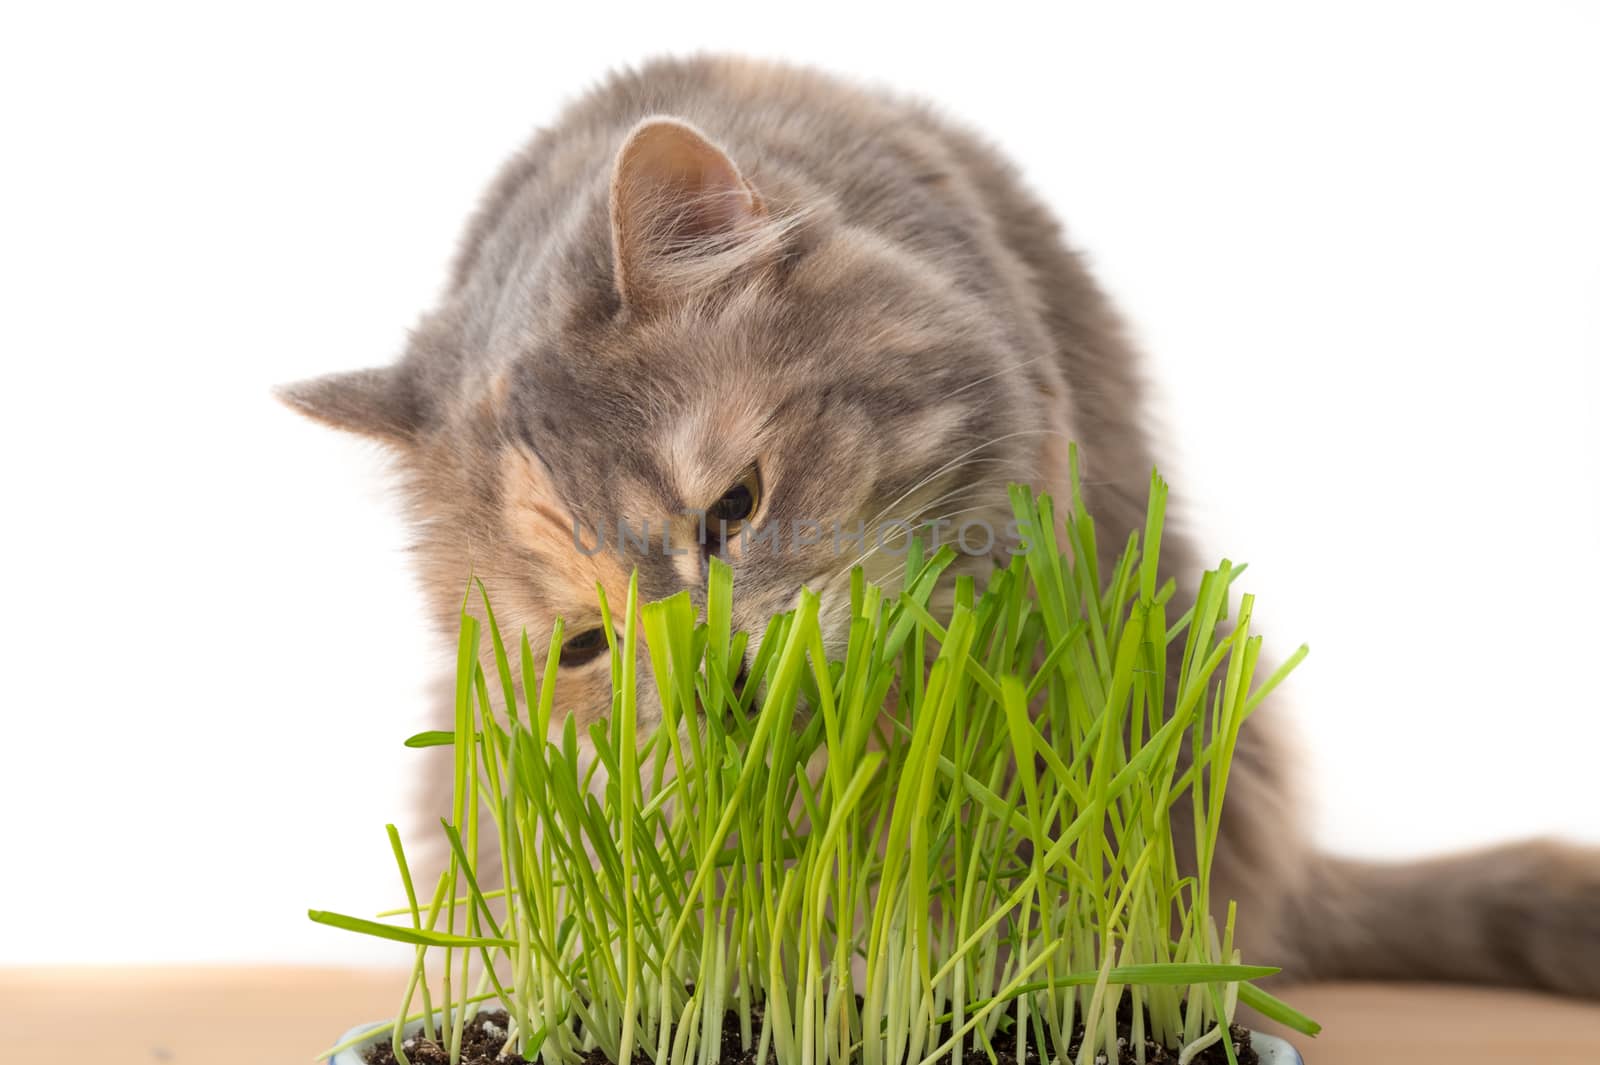 Calico cat eating cat grass